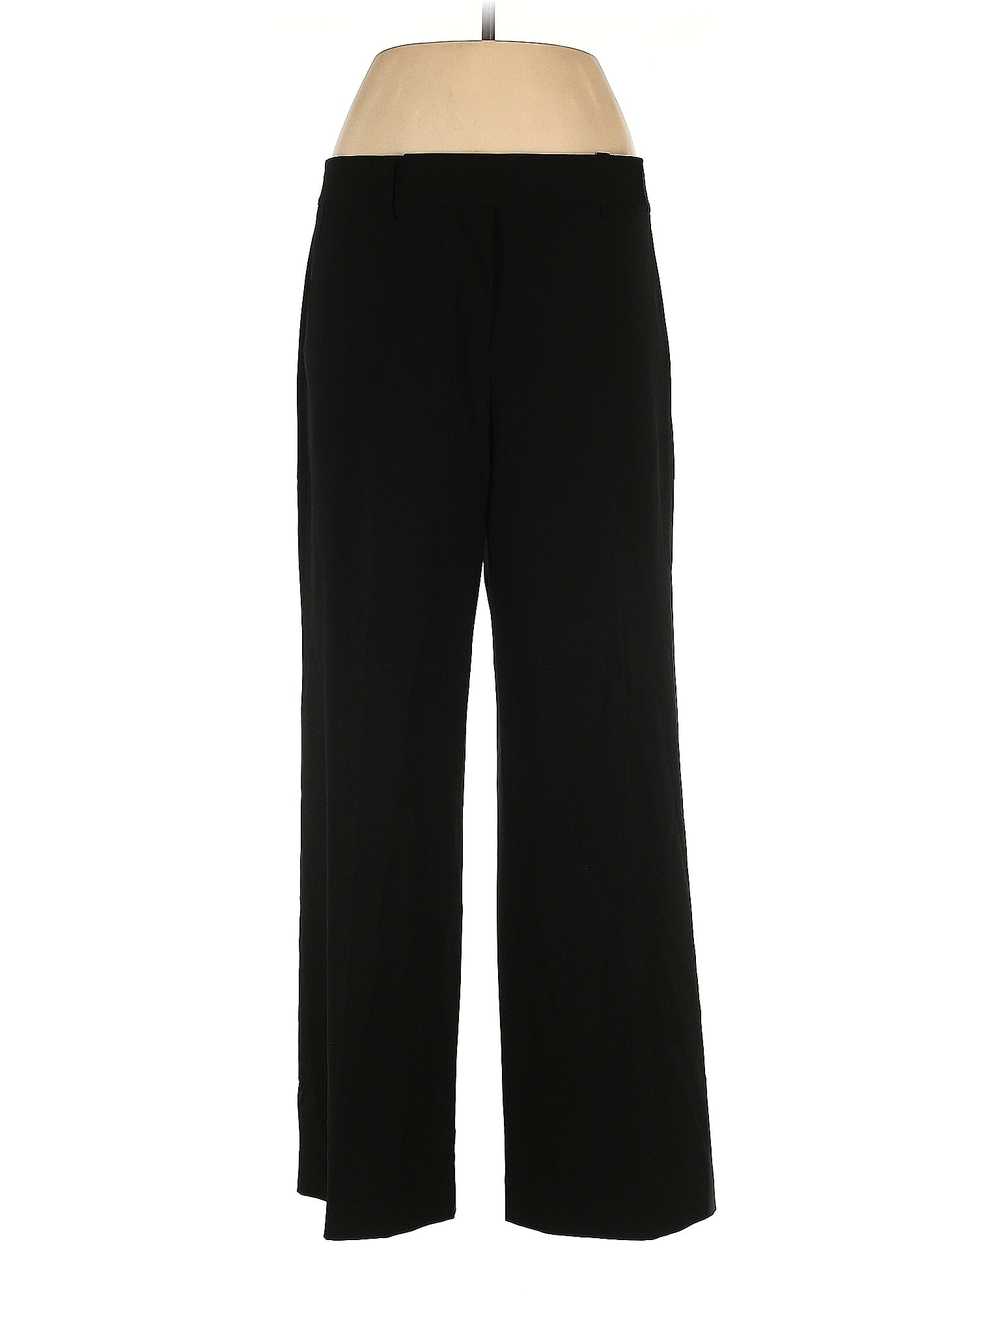 DKNY Women Black Wool Pants 10 - image 1